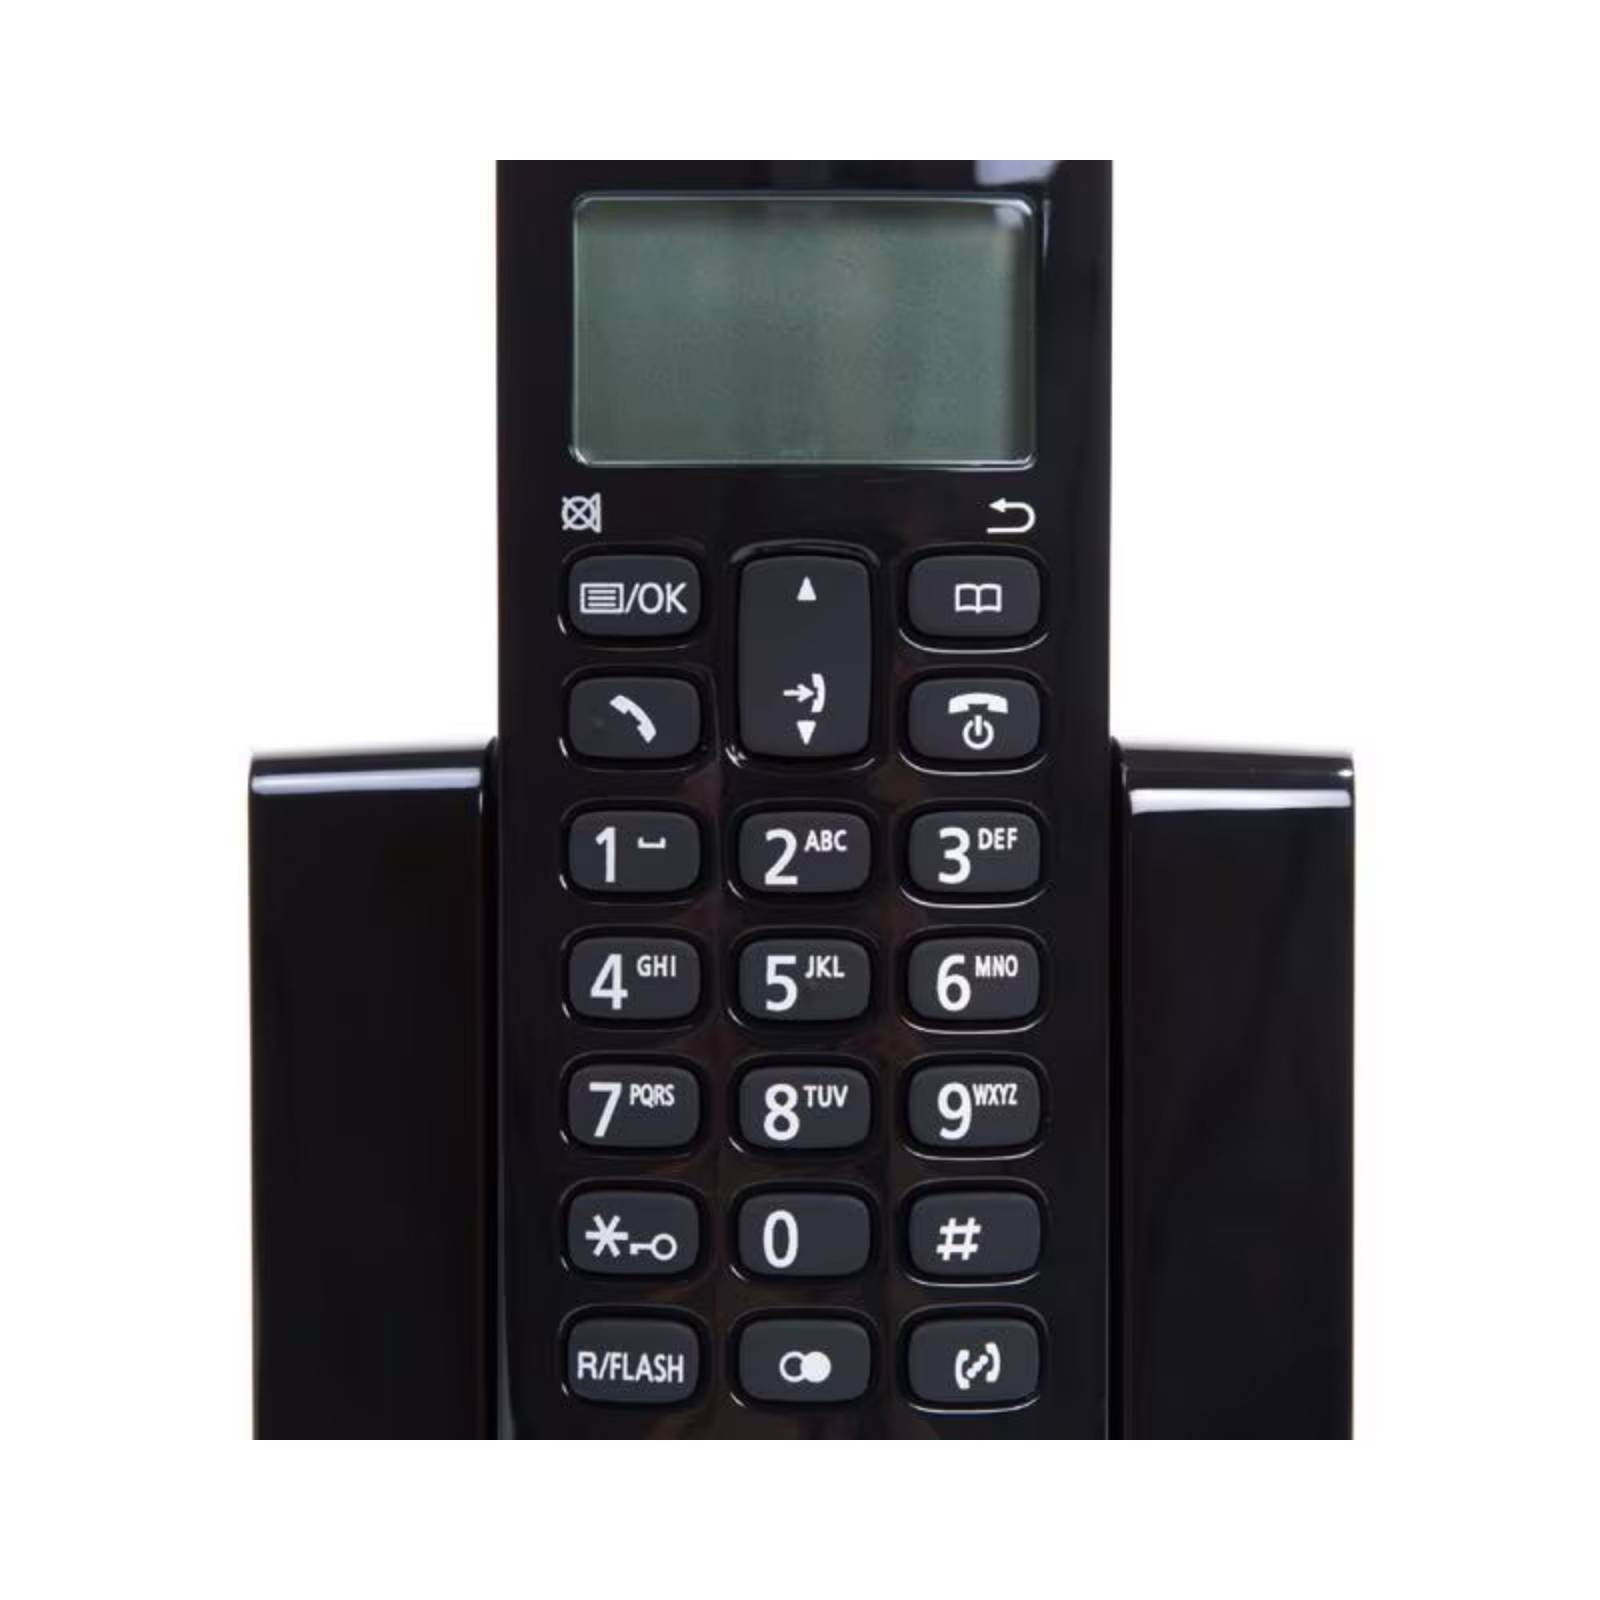 Teléfono Inalámbrico PANASONIC KX-TG1711MEB identificador de llamadas